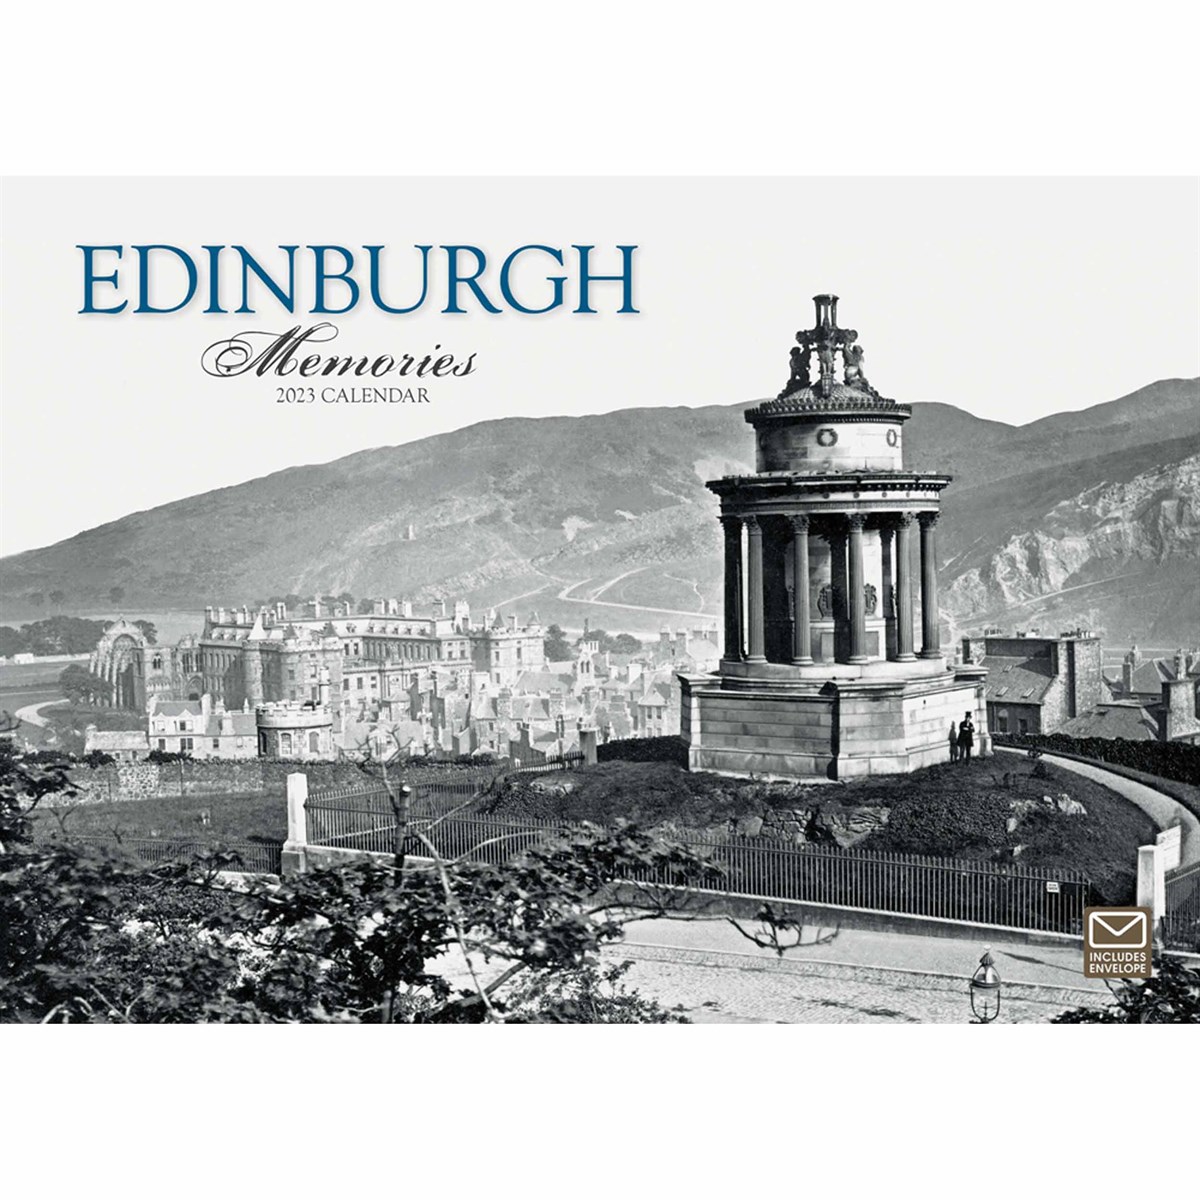 Edinburgh Memories A4 2023 Calendars